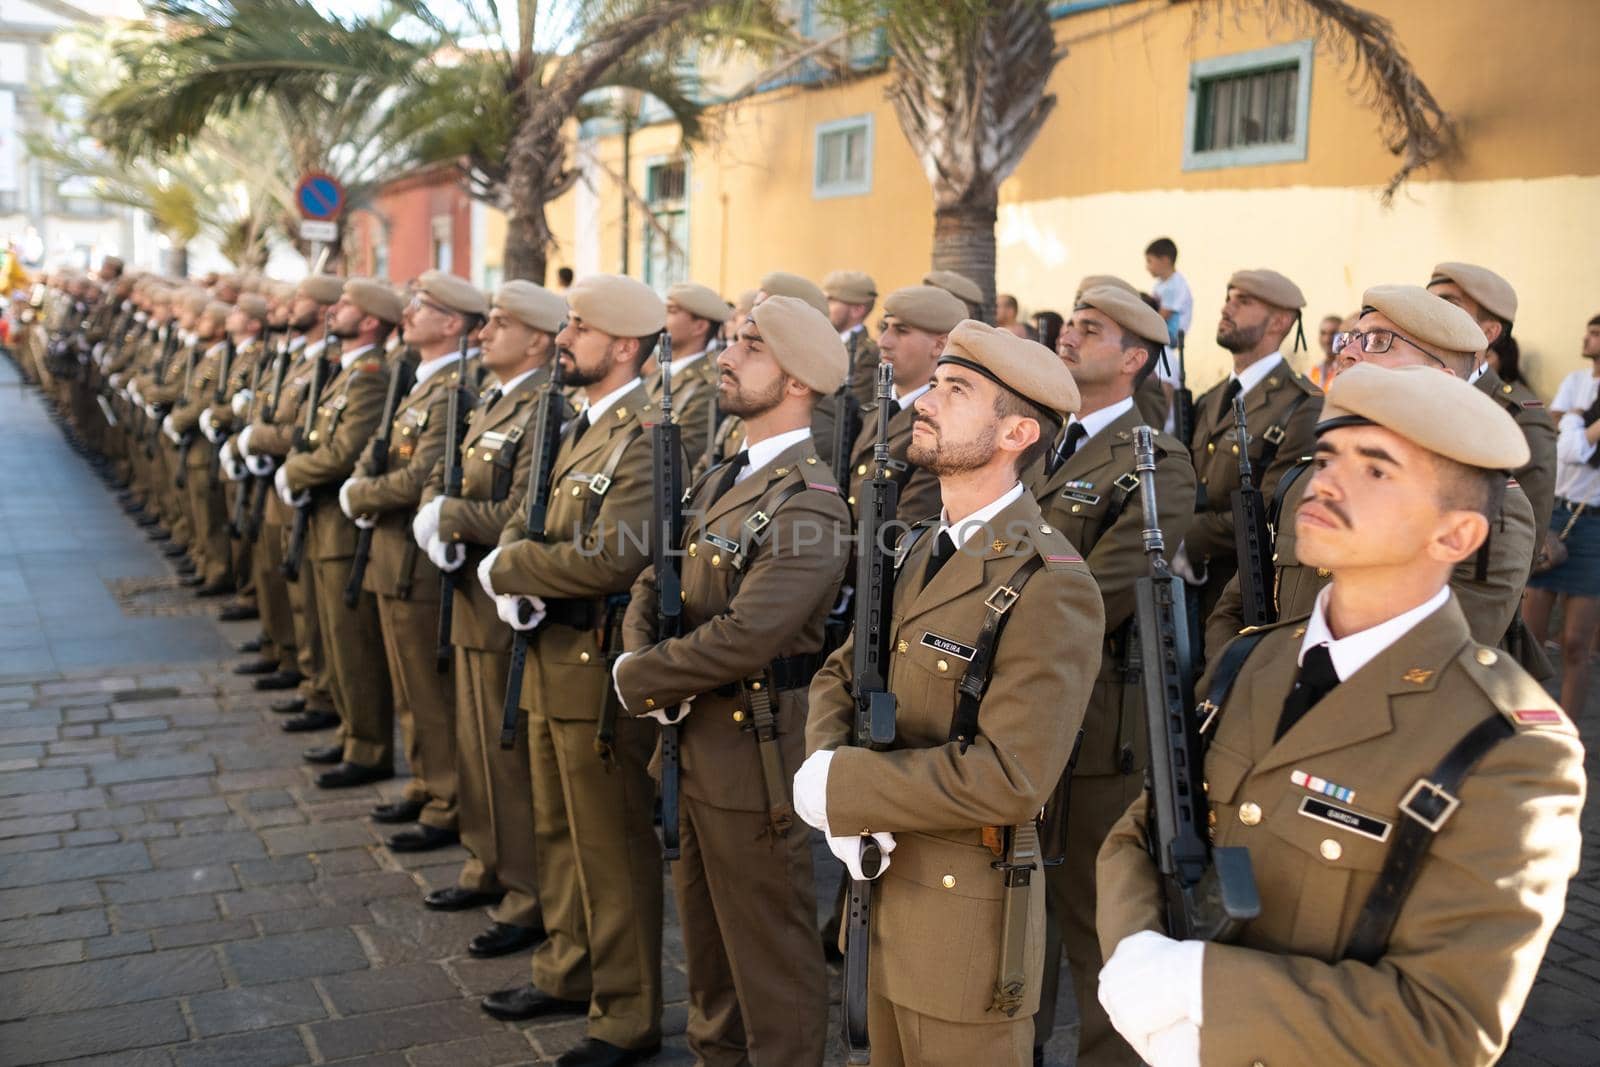 July 25, 2019. A guard of honor greets a guest in the City of Santa Cruz de Tenerife. Canary Islands, Spain.